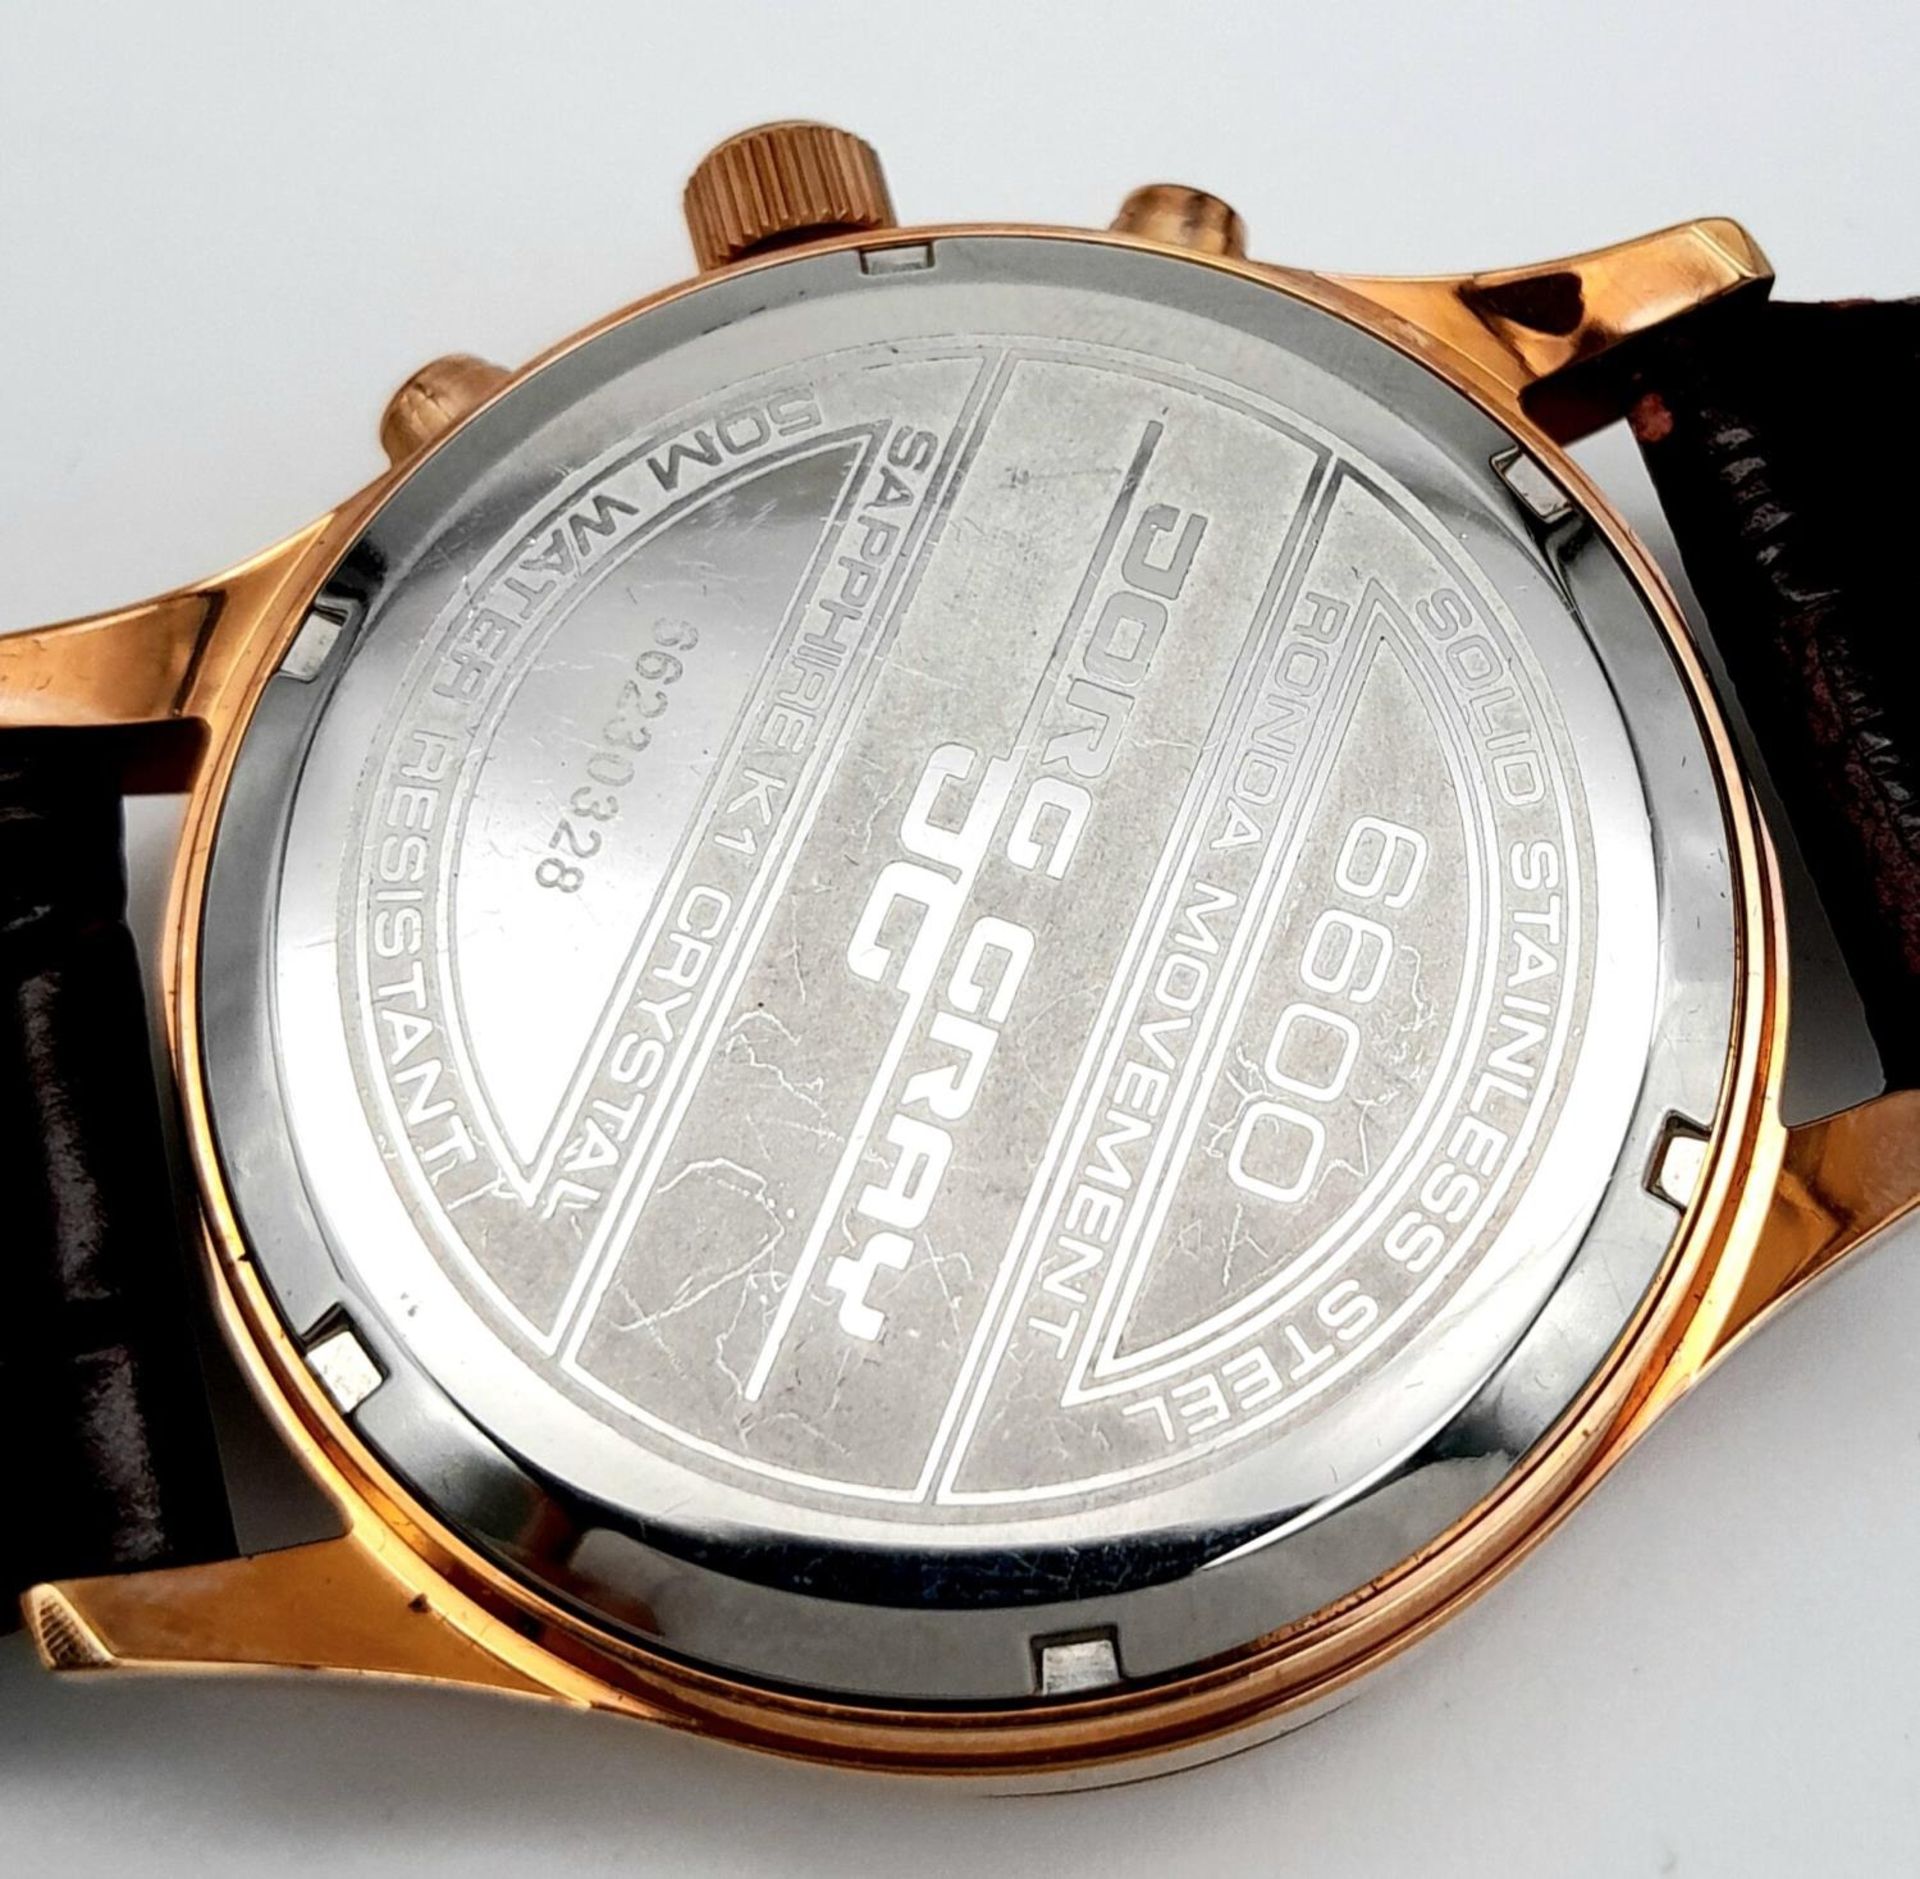 A Jorg Gray Quartz Chronograph Gents Watch. Burgundy leather strap. Gilded case - 42mm. White dial - Bild 5 aus 7